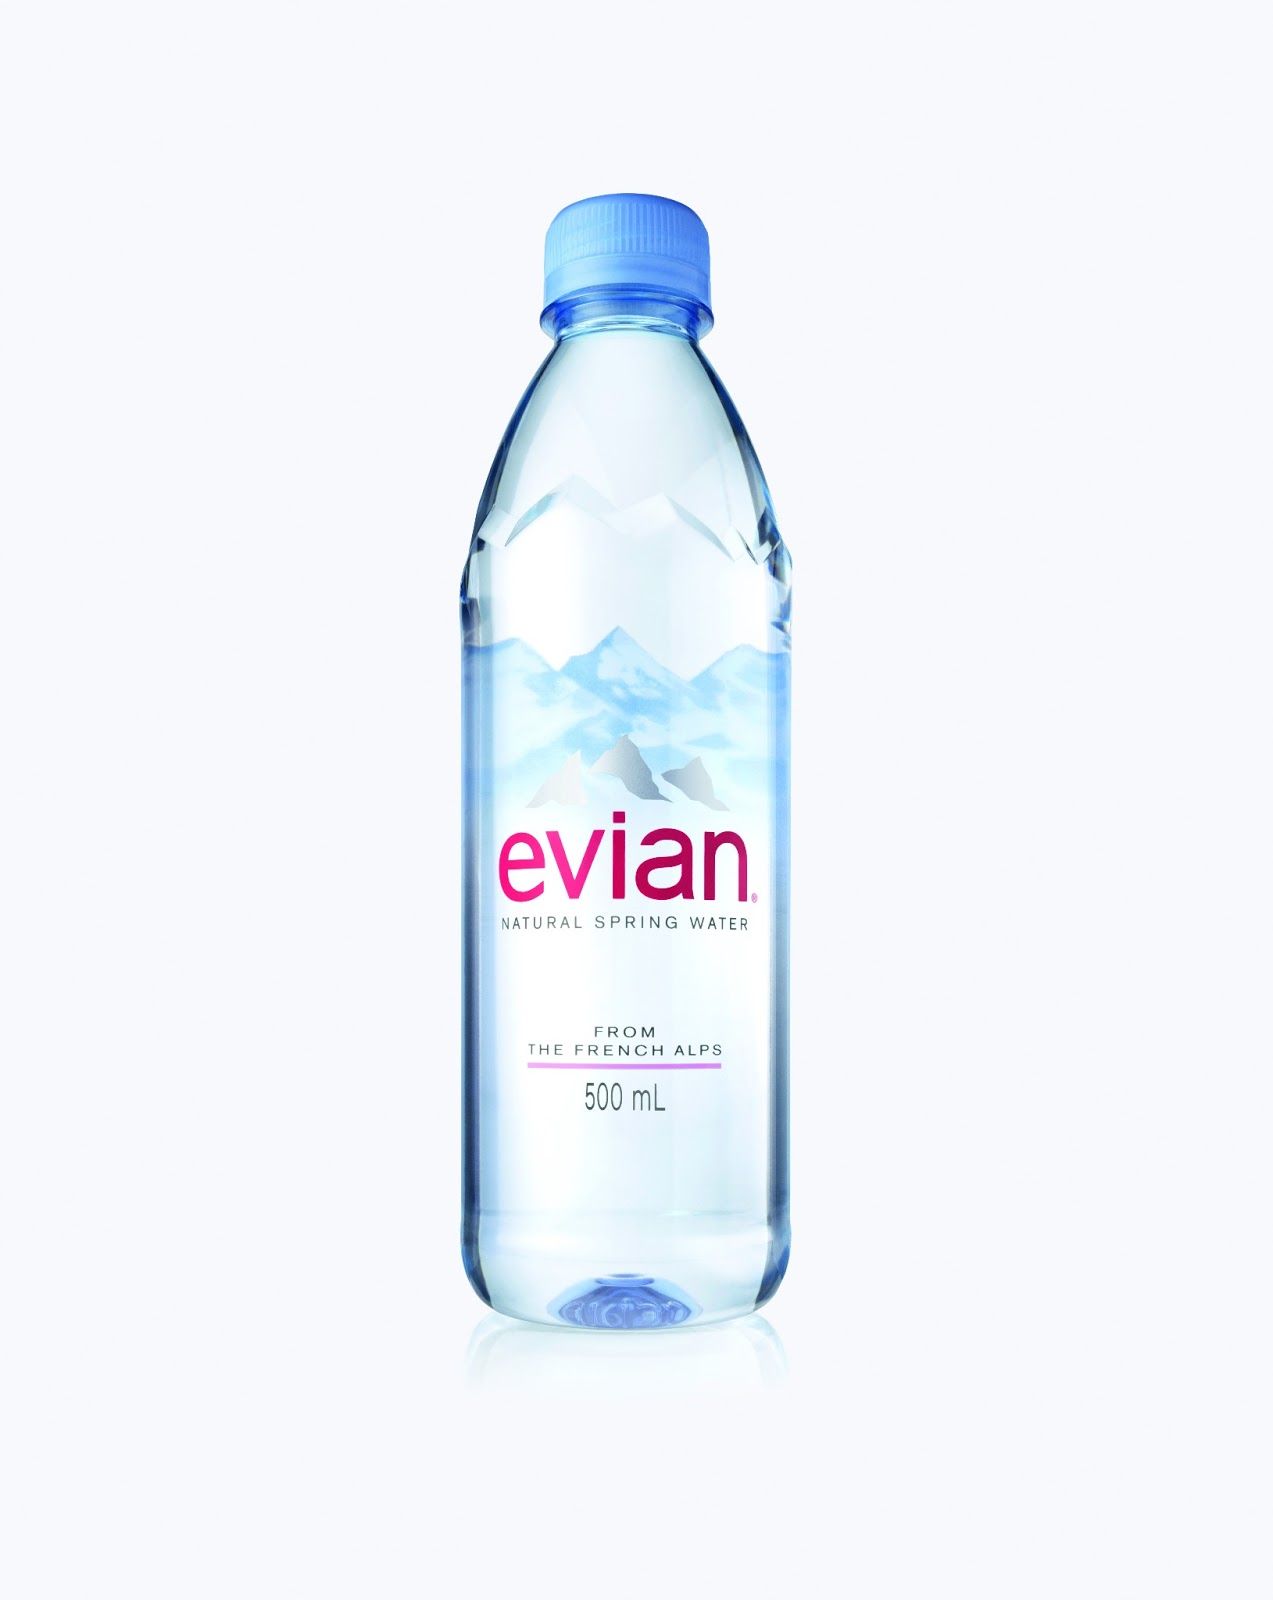 evian Natural Spring Water Debuts New Bottle Design | Natural spring ...